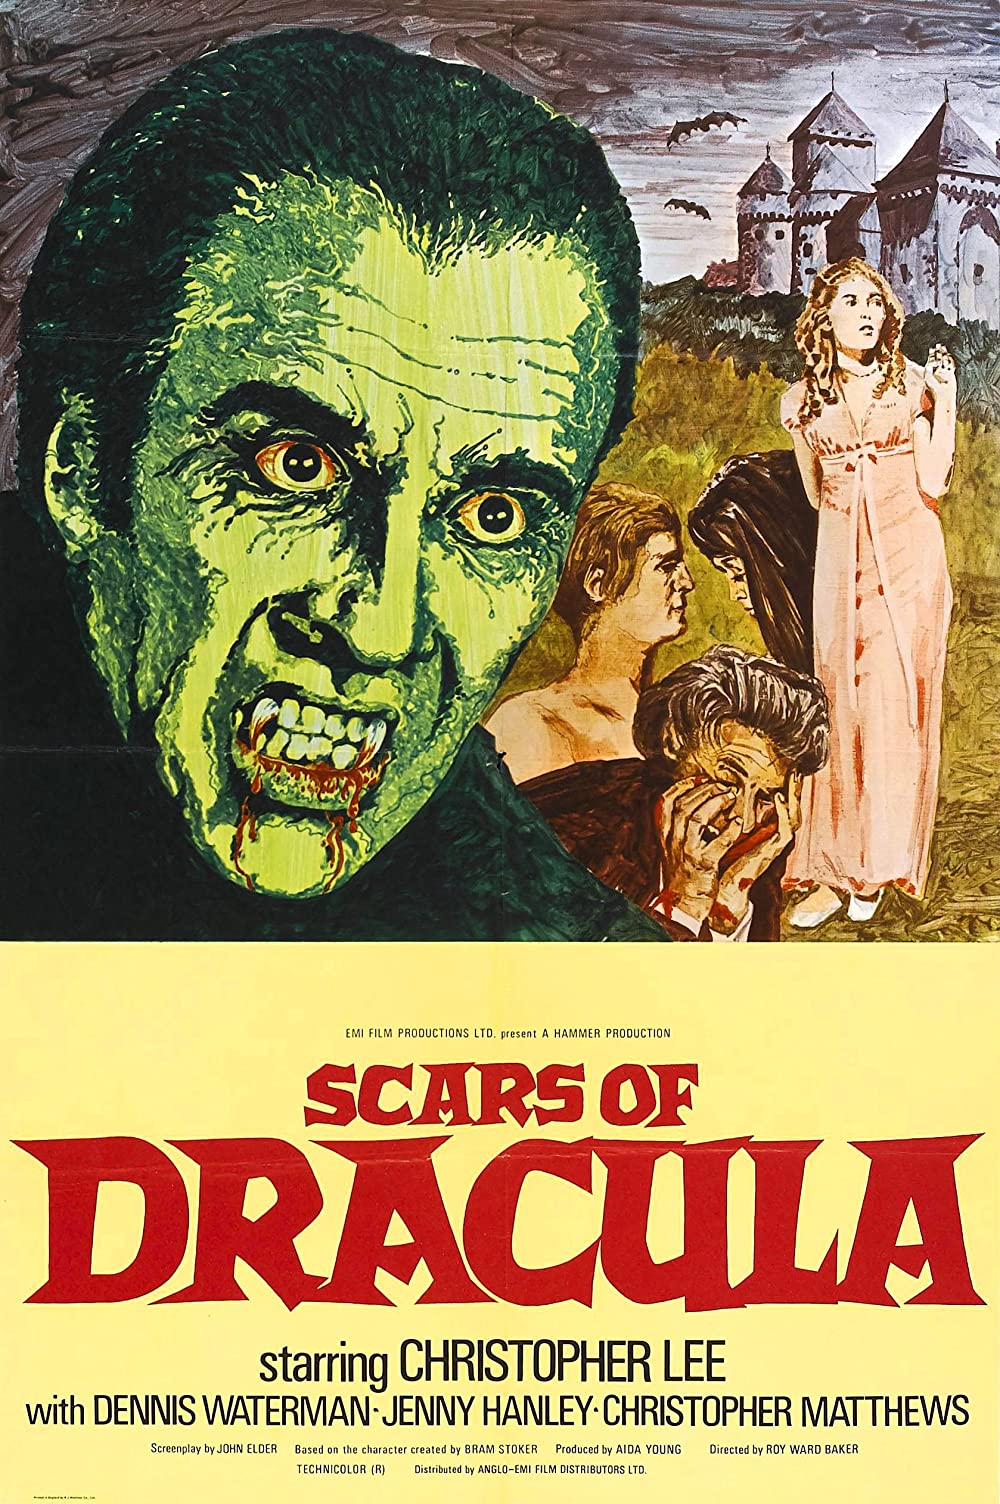 Filmbeschreibung zu Dracula - Nächte des Entsetzens